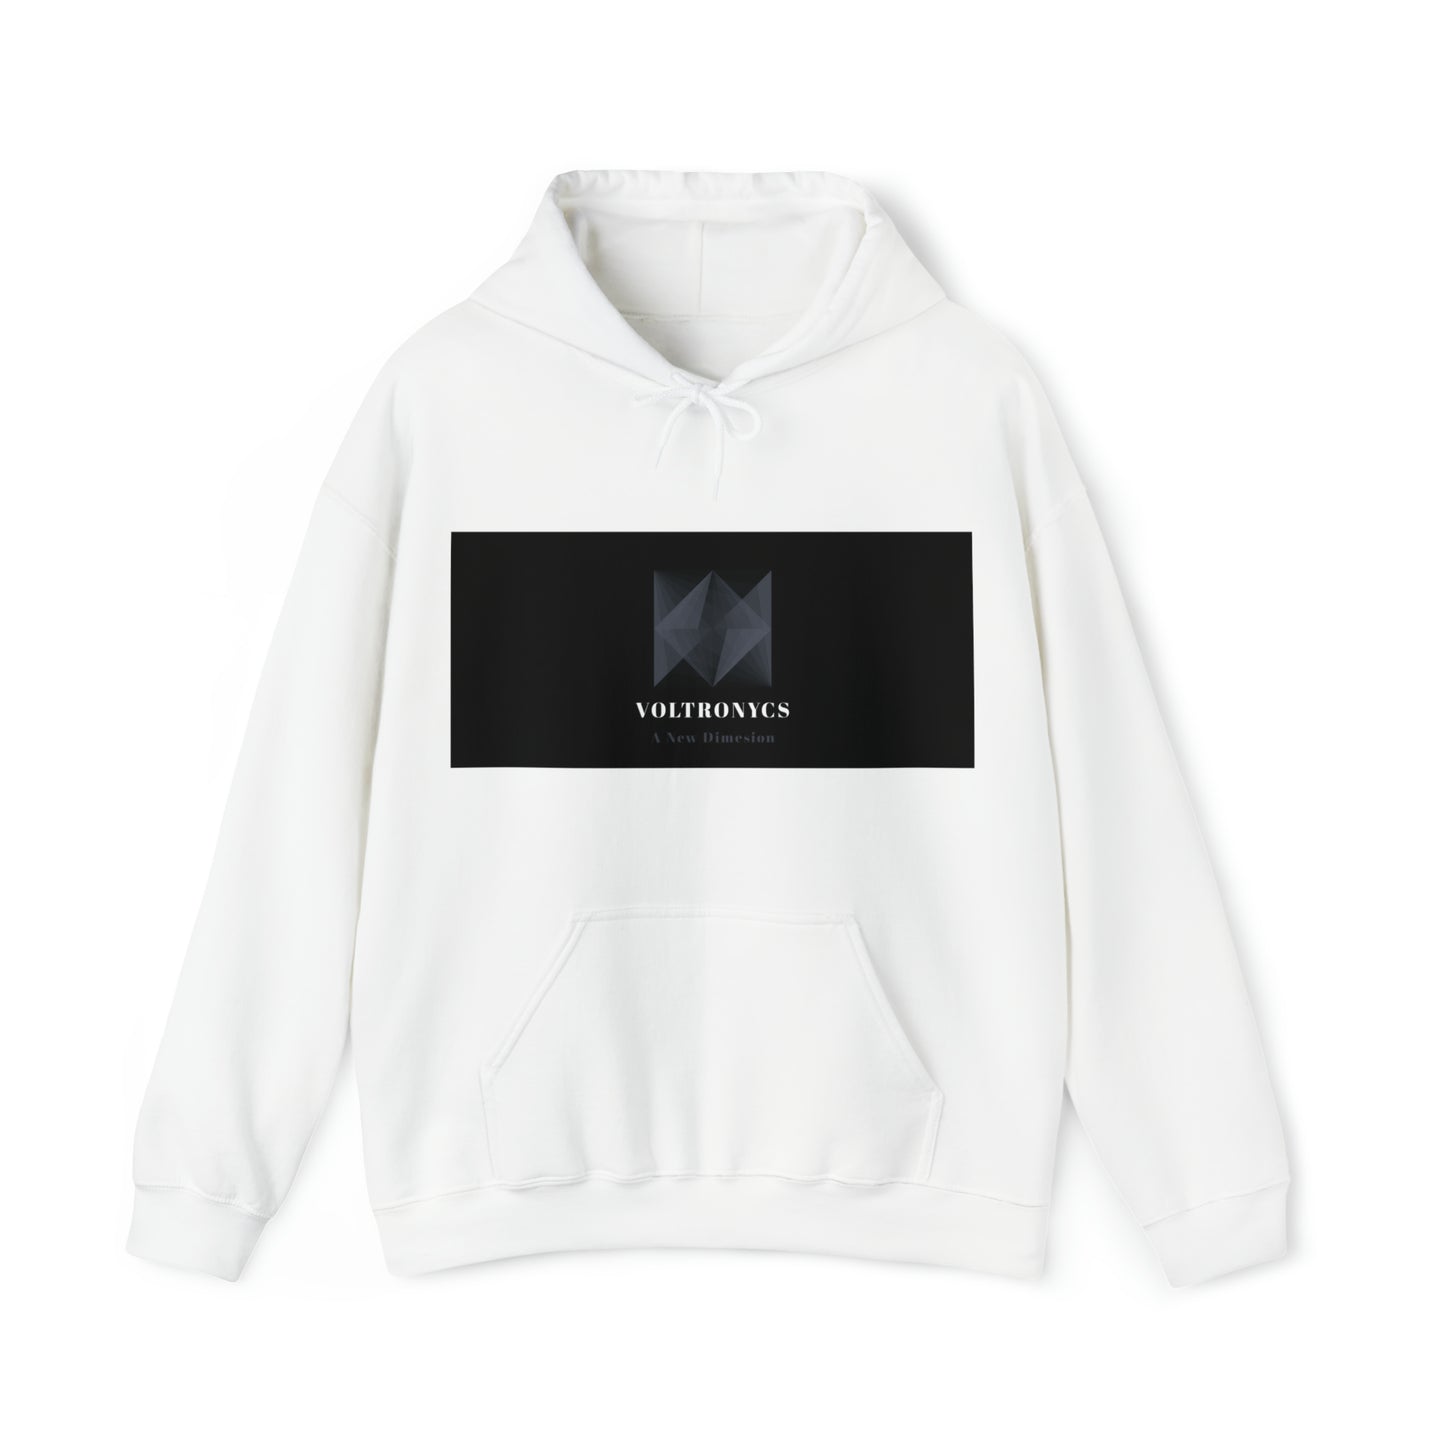 Unisex Heavy Blend™ Hooded Sweatshirt